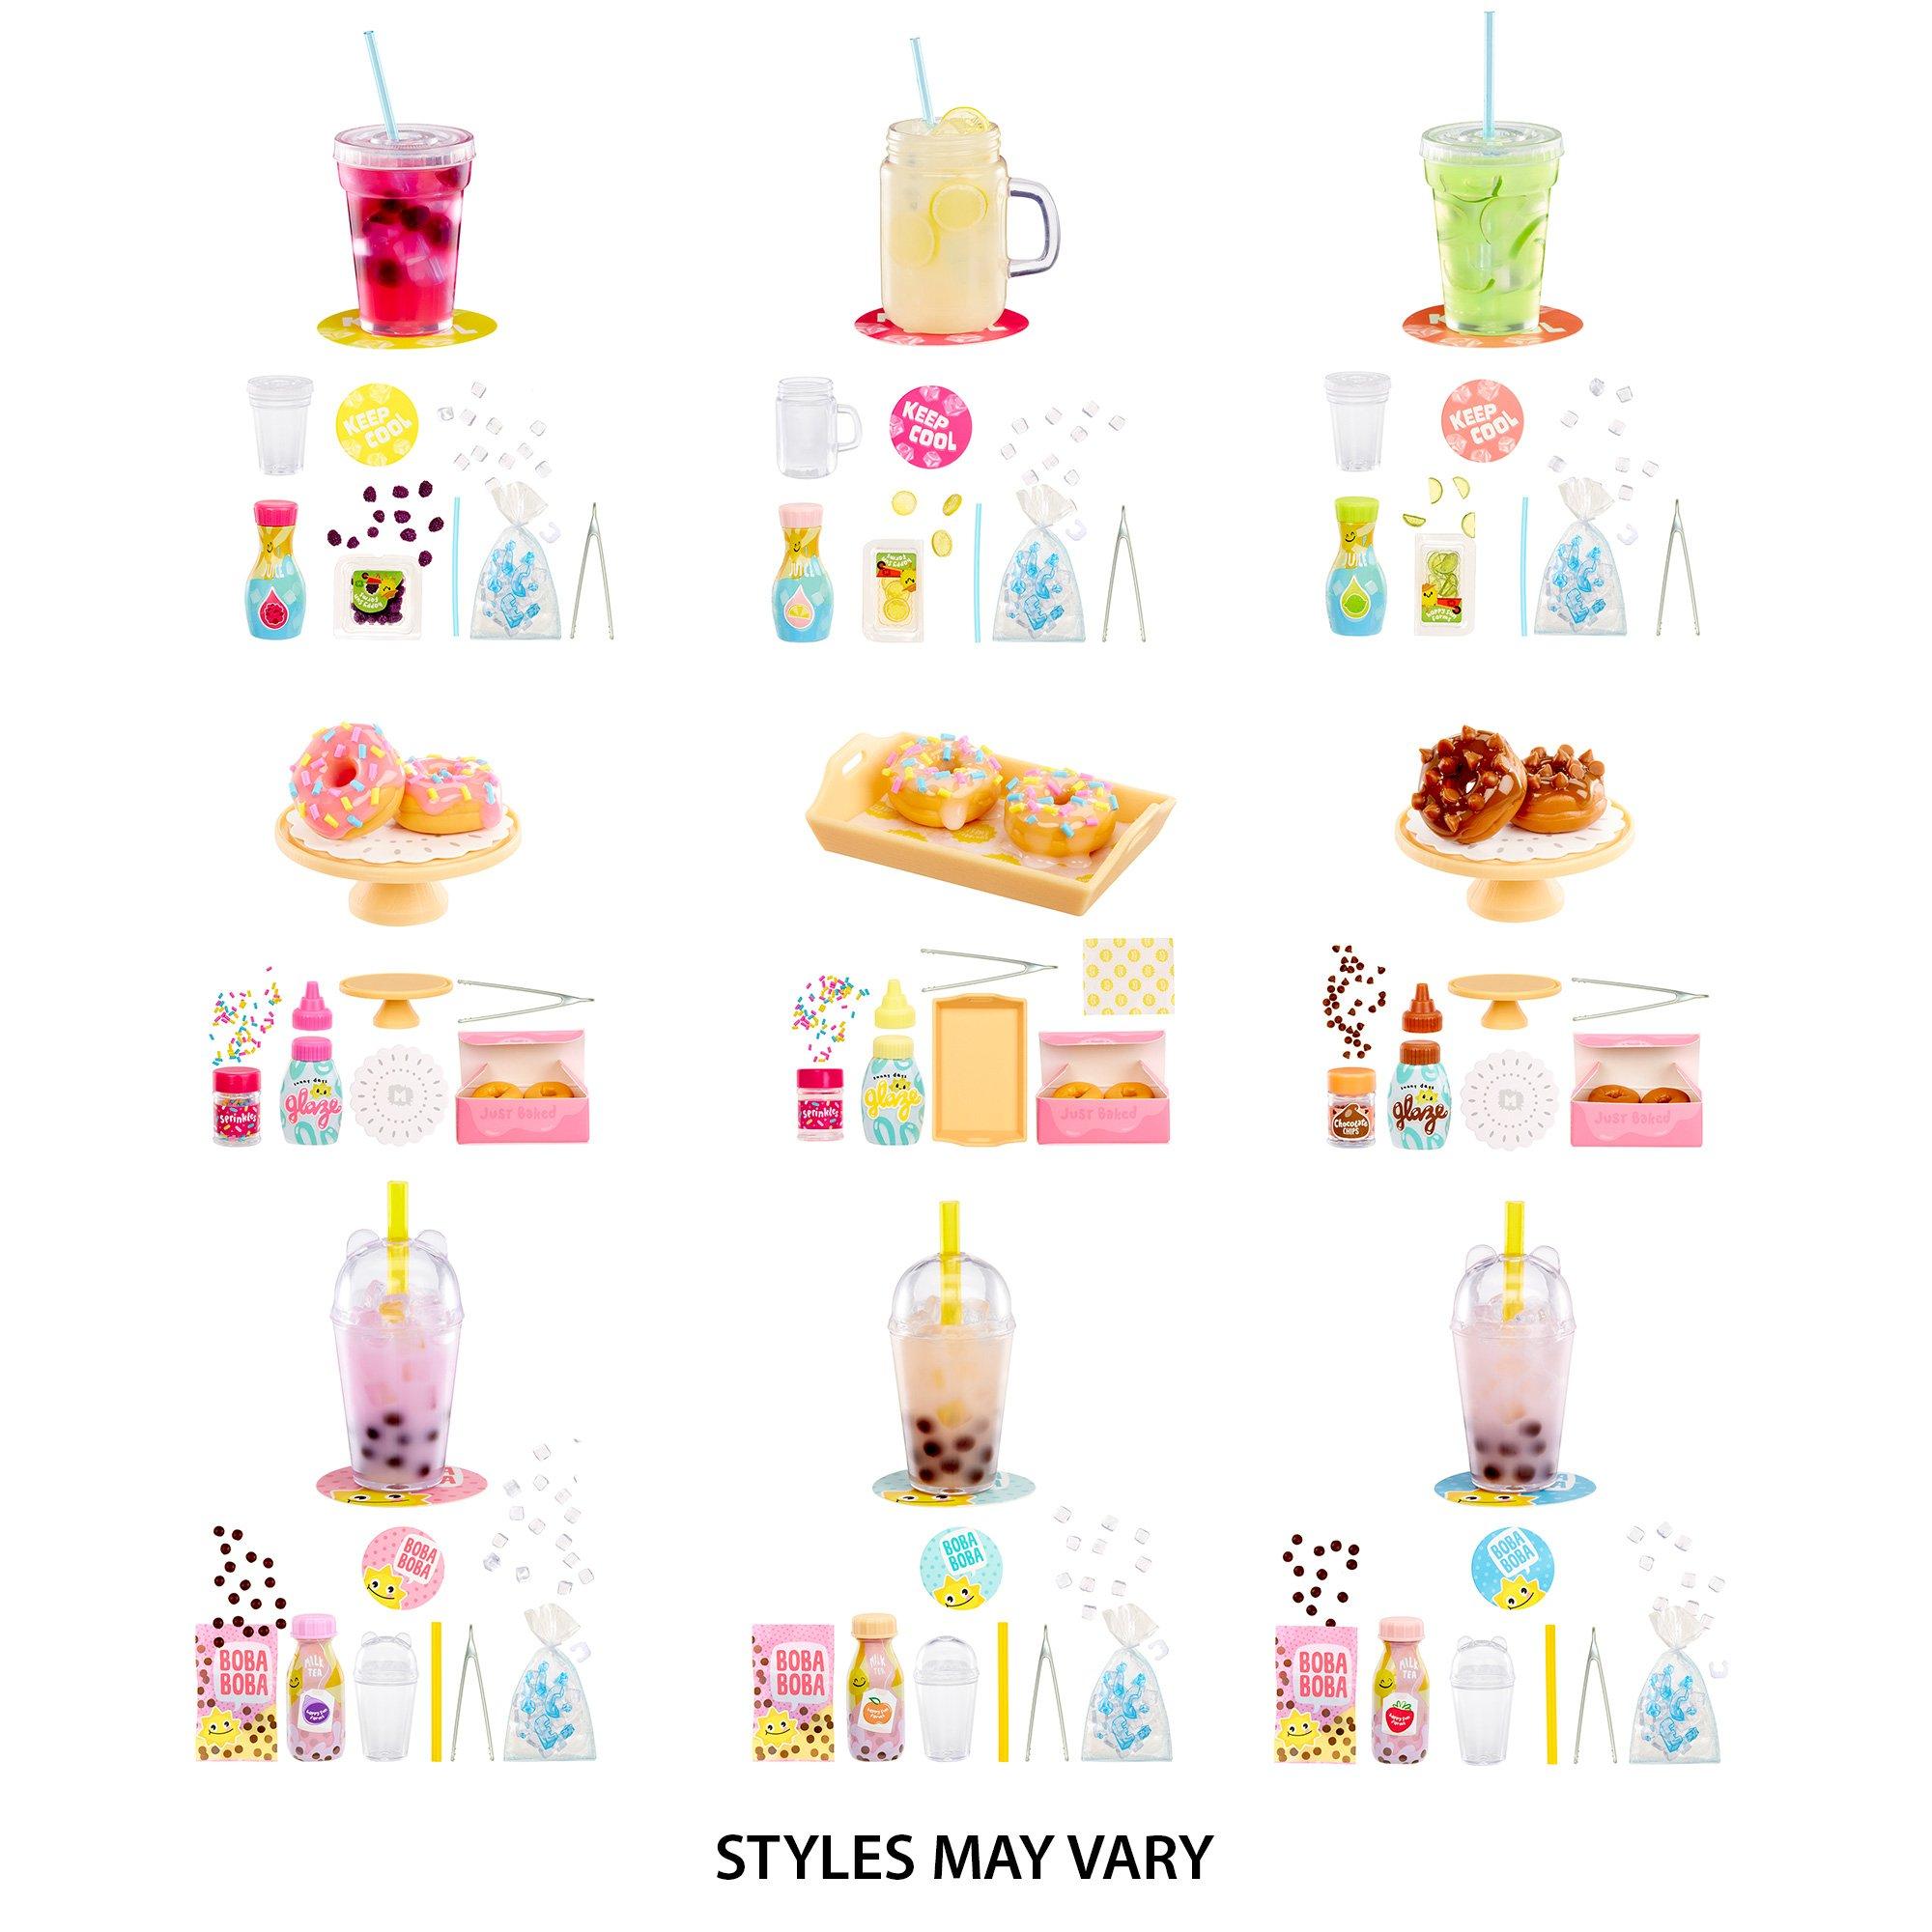 MGA's Miniverse - Make It Mini Food Cafe Series 1 Minis